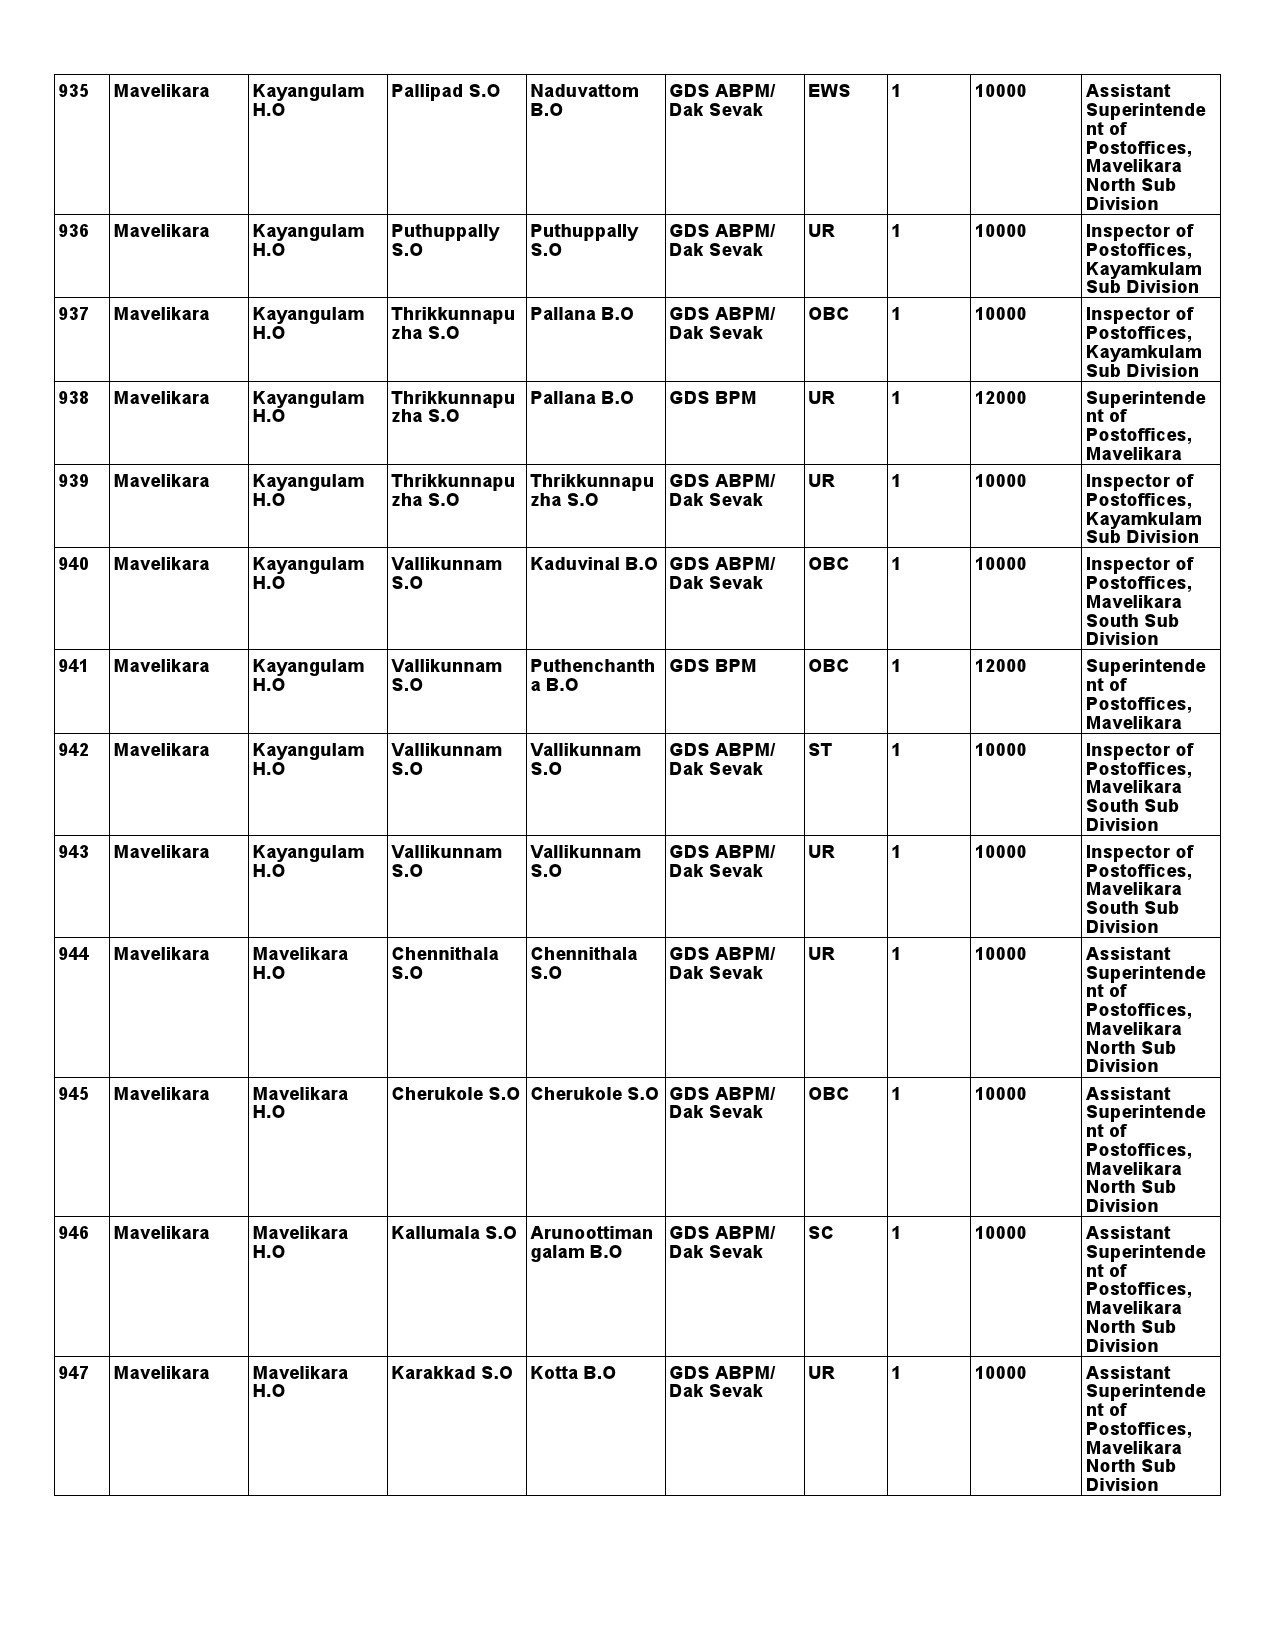 Kerala Postal Circle GDS Recruitment 2021 notification - Notification Image 80